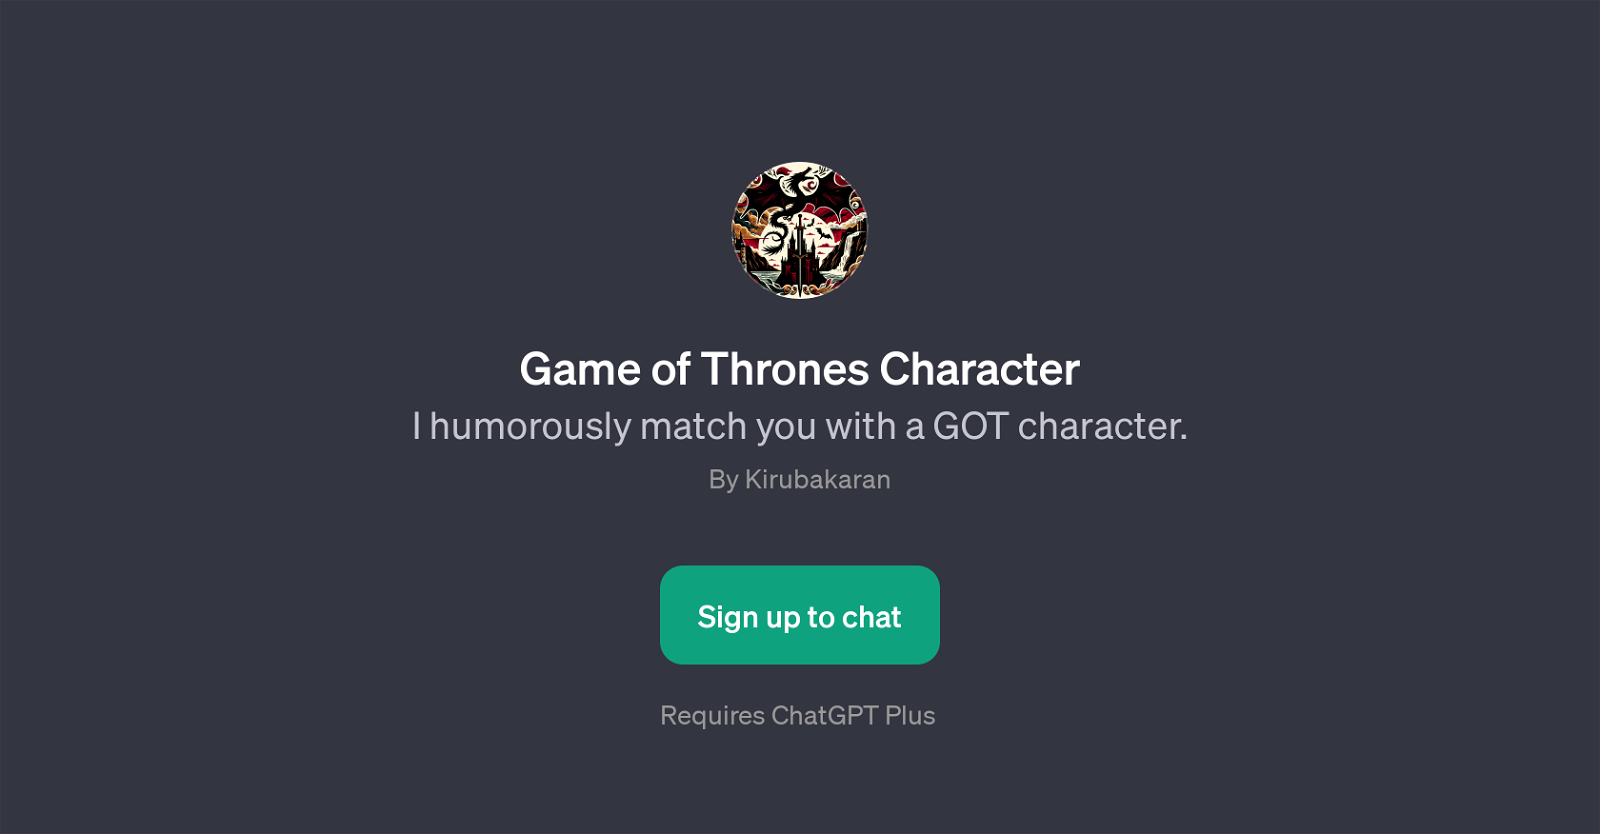 Game of Thrones Character website